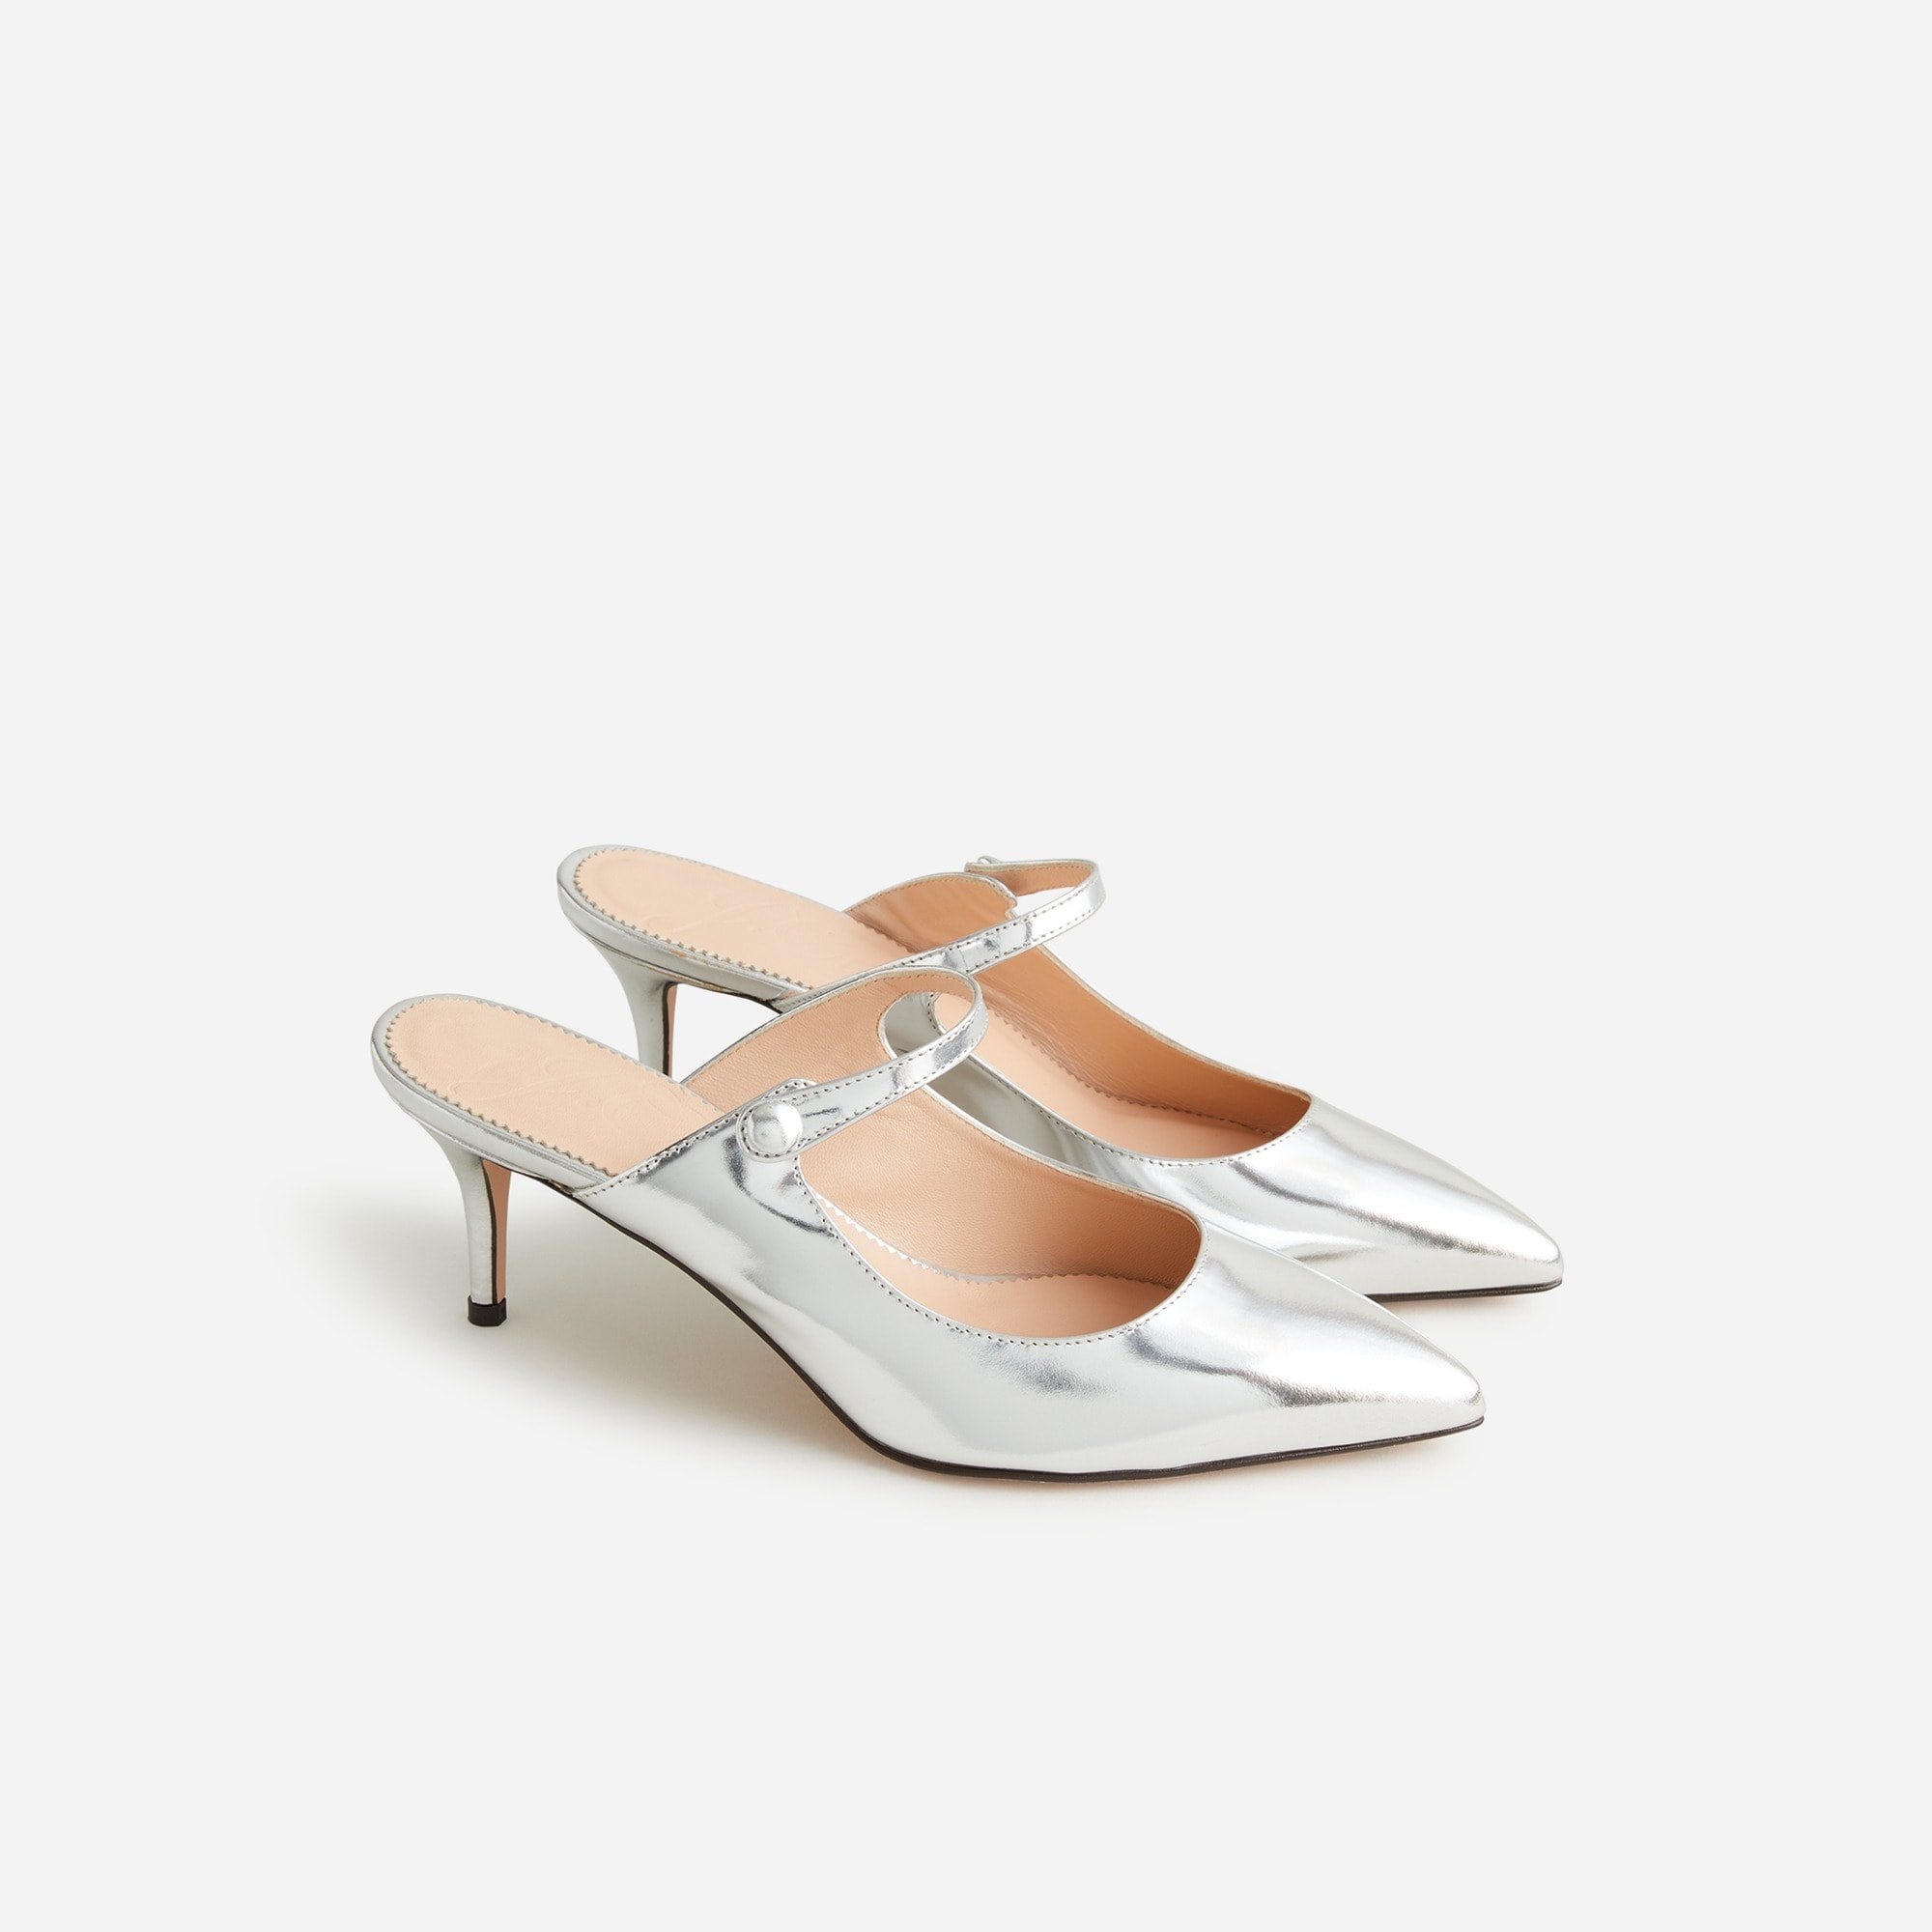 womens Colette mule heels in Italian specchio leather